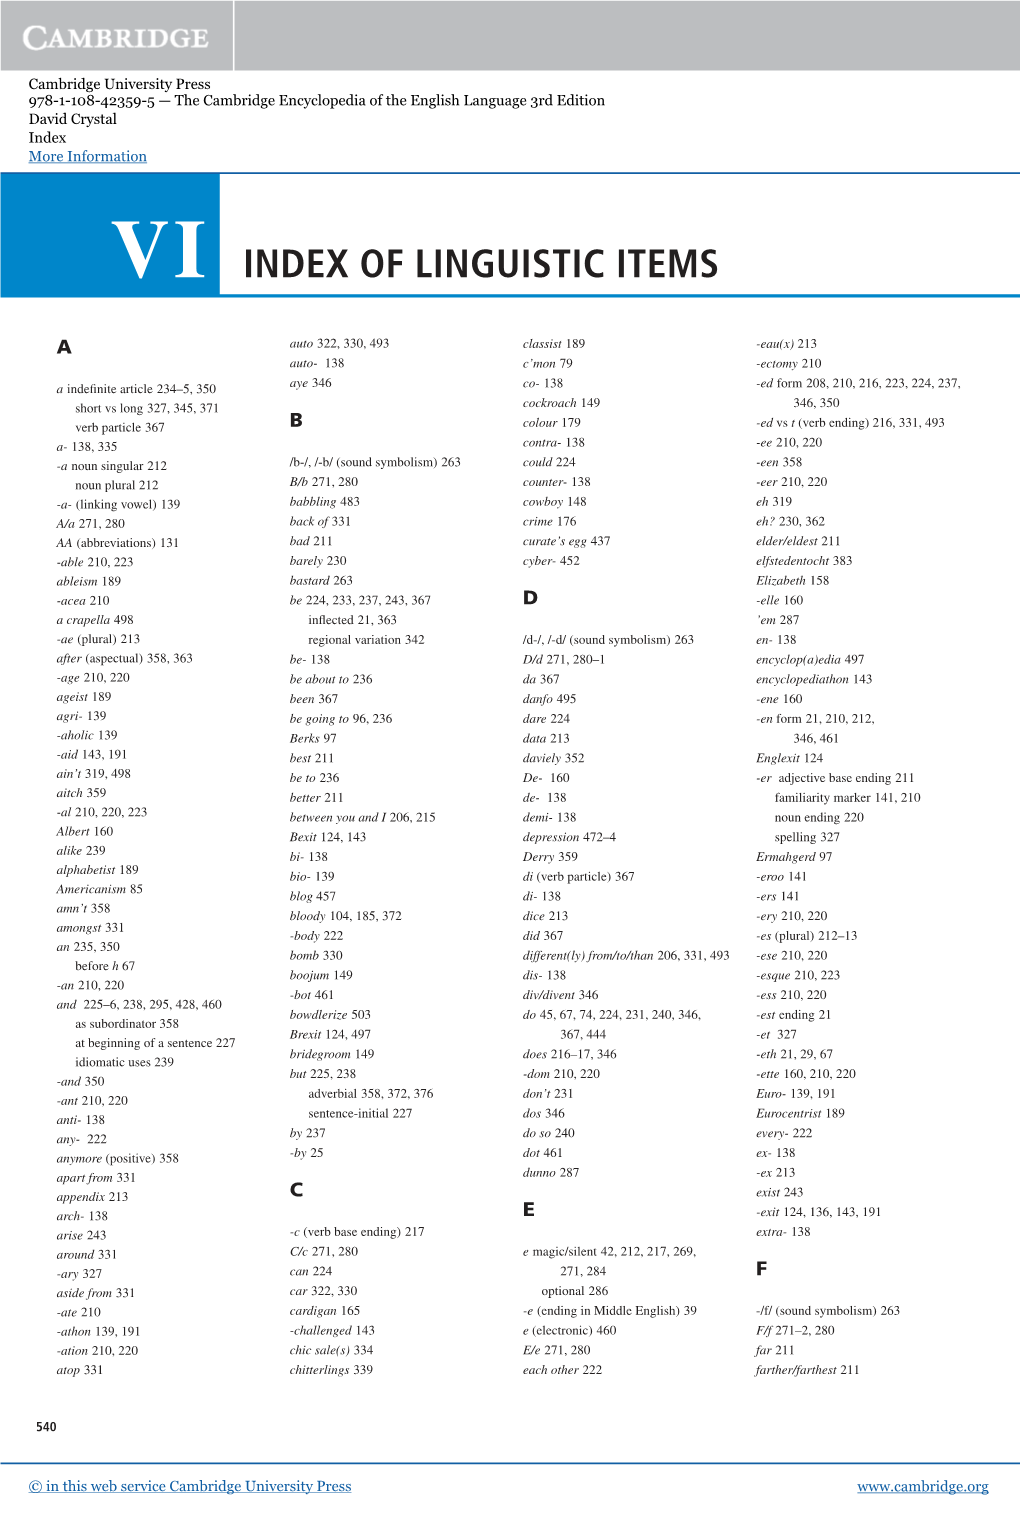 Index of Linguistic Items